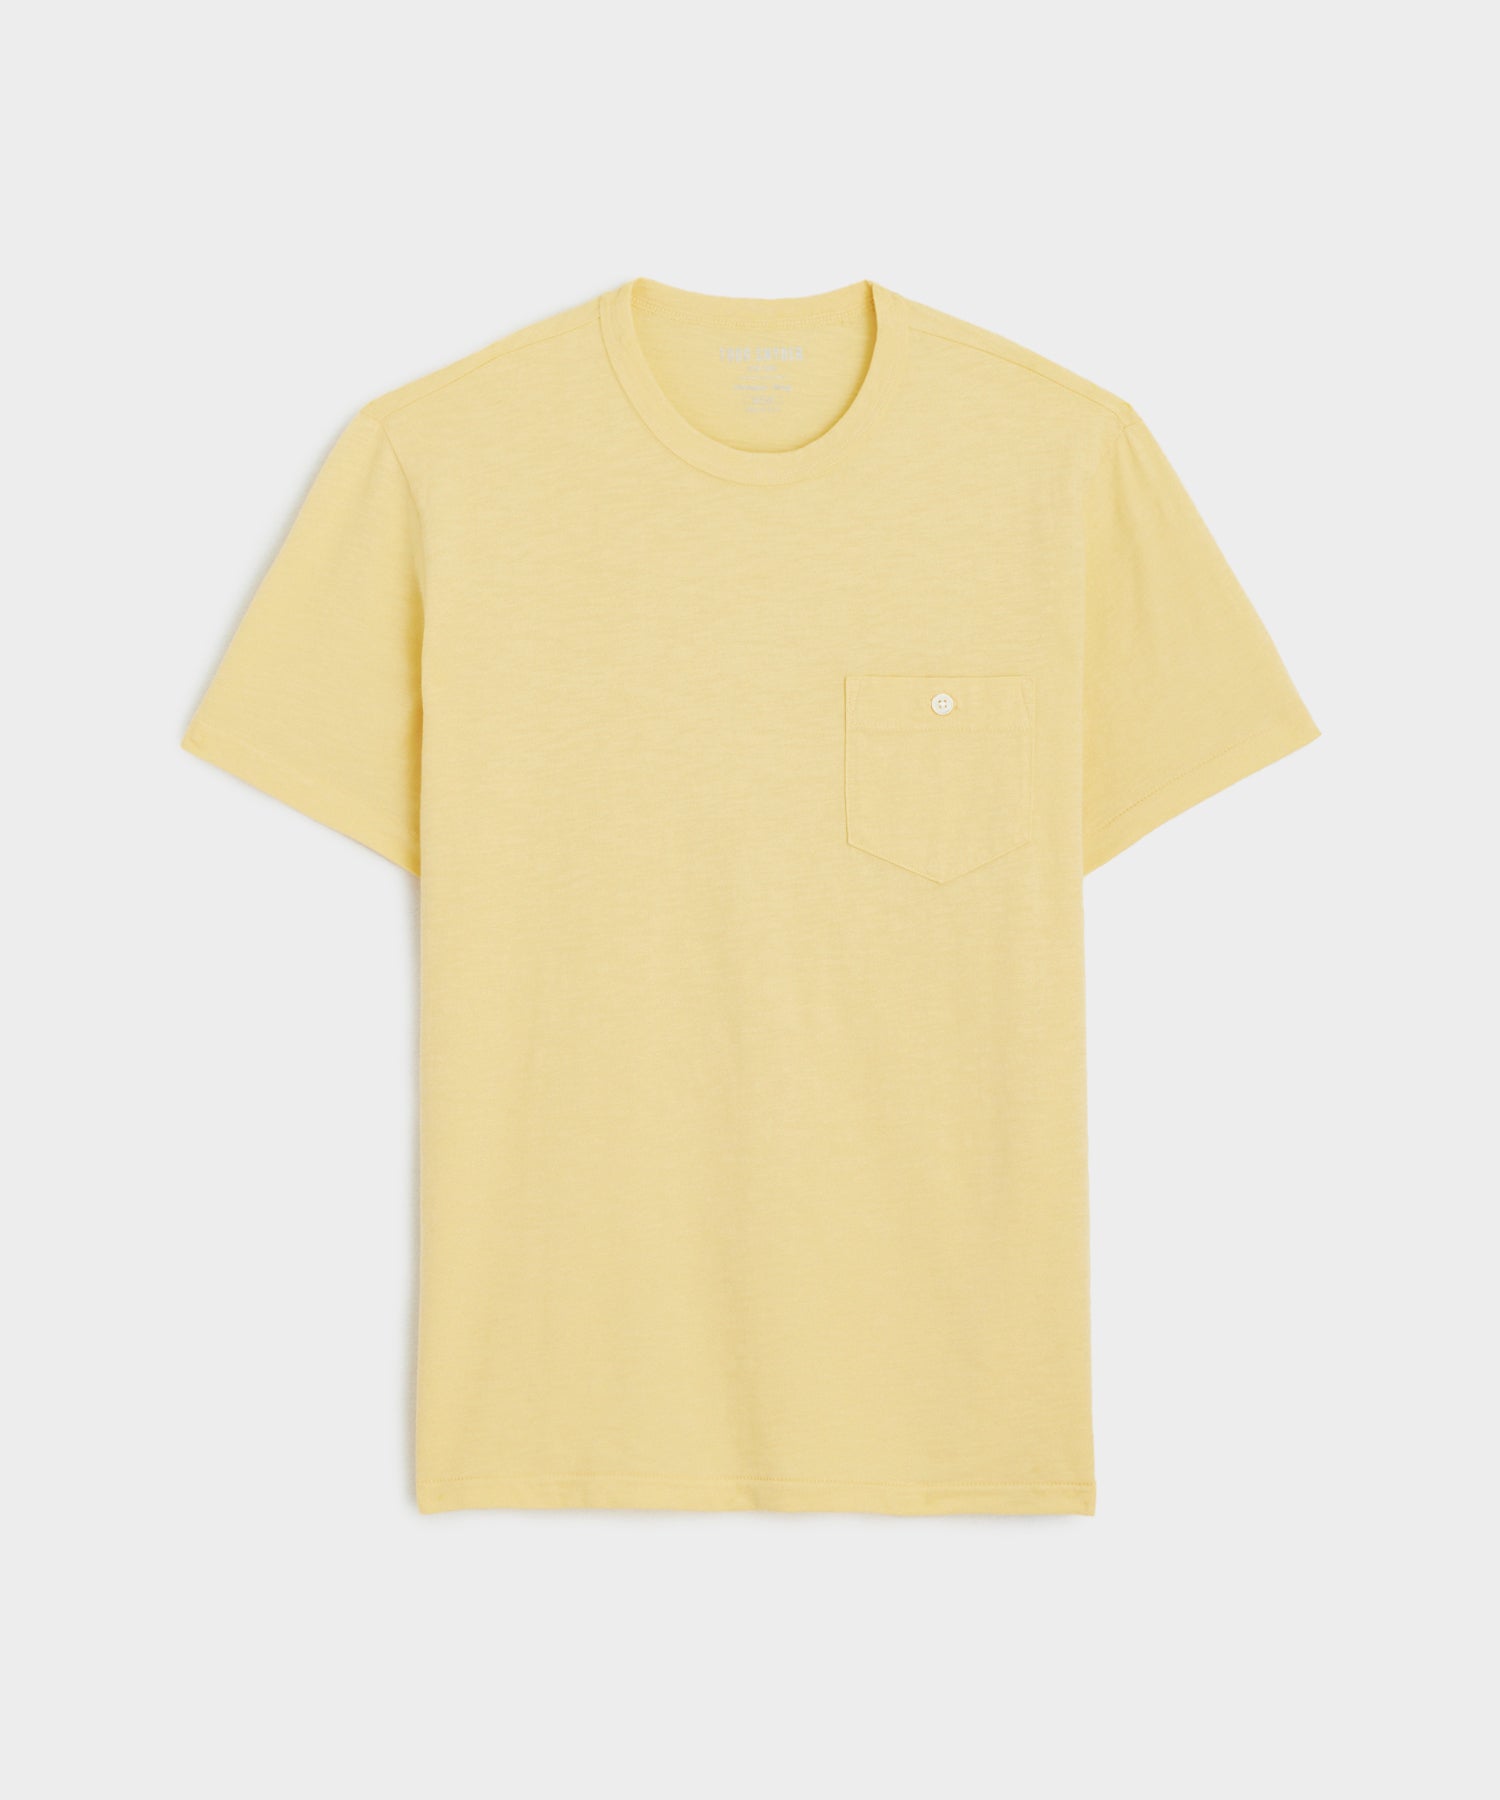 Made in L.A. Homespun Slub Pocket T-Shirt in  Lemon